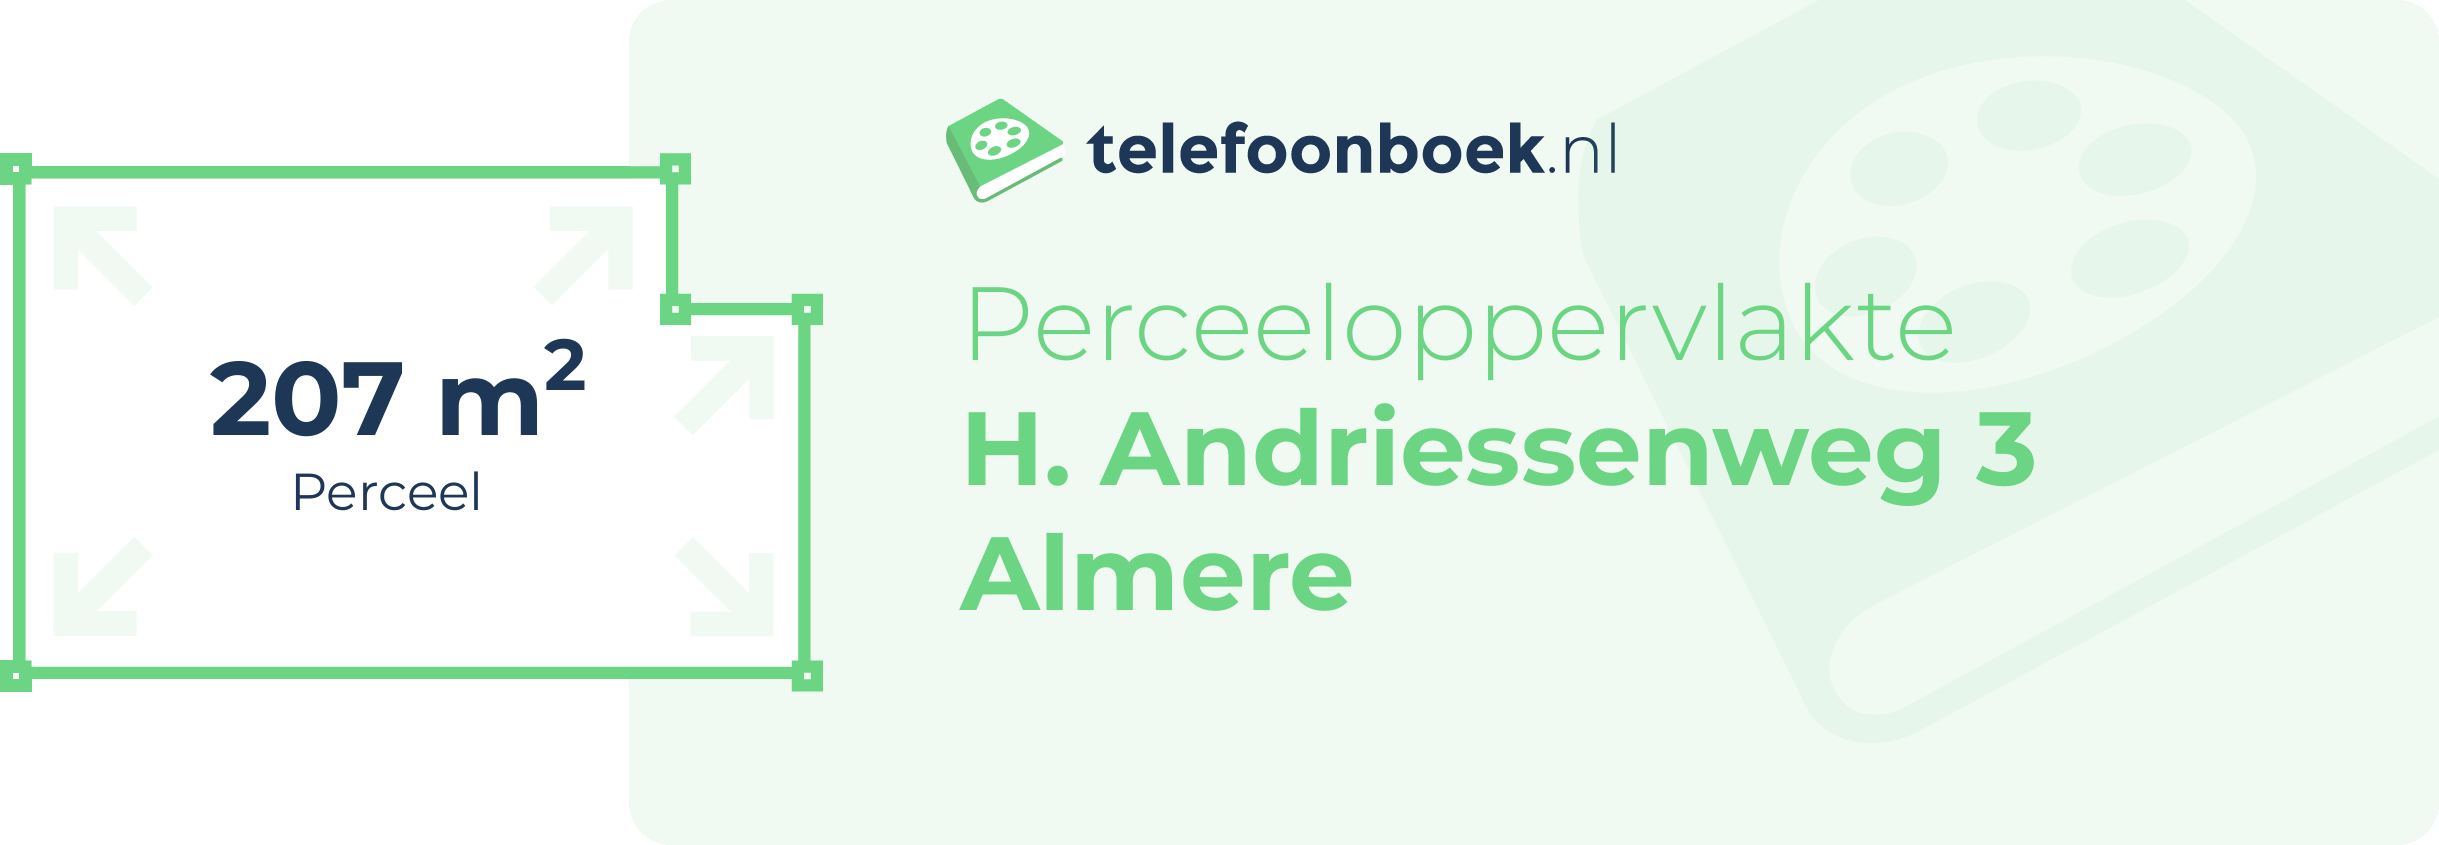 Perceeloppervlakte H. Andriessenweg 3 Almere